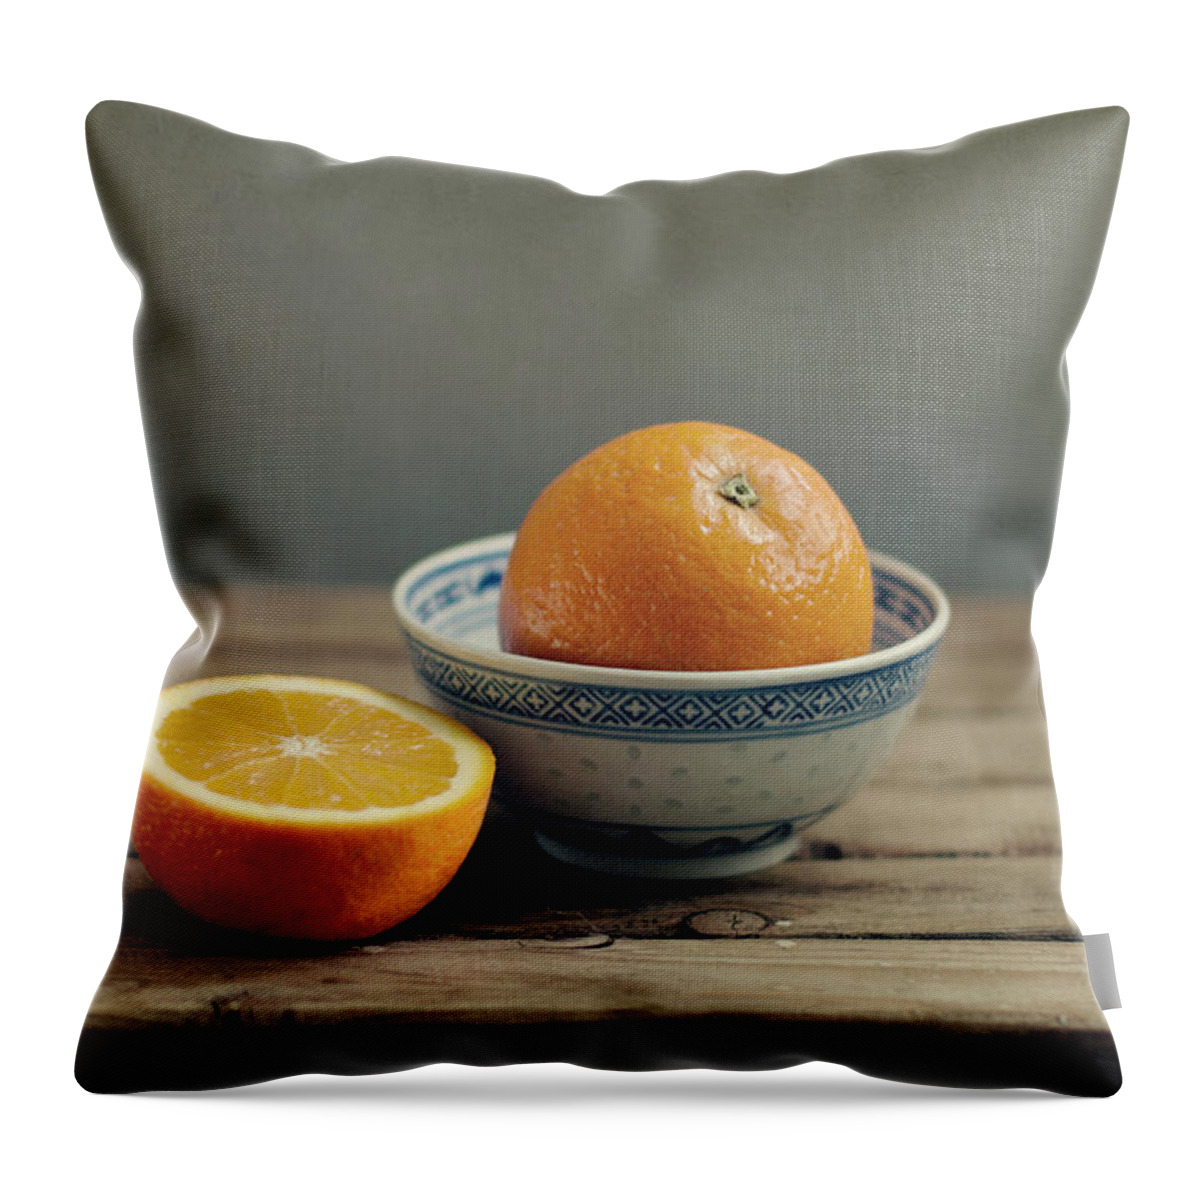 Orange Throw Pillow featuring the photograph Orange In Chinese Bowl And Half Orange by Copyright Anna Nemoy(xaomena)